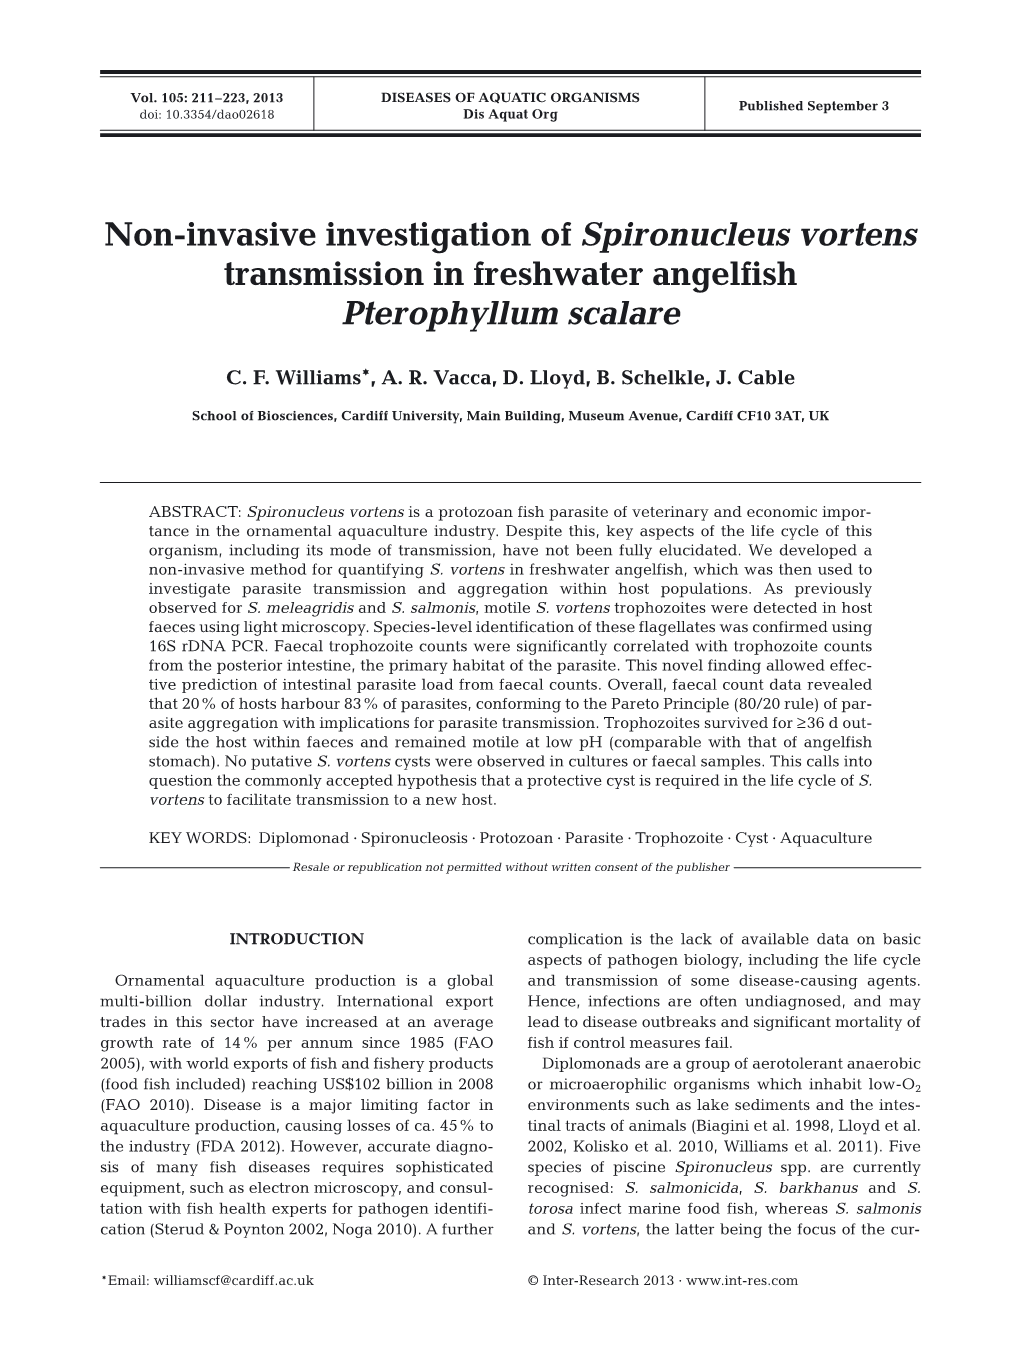 Non-Invasive Investigation of Spironucleus Vortens Transmission in Freshwater Angelfish Pterophyllum Scalare